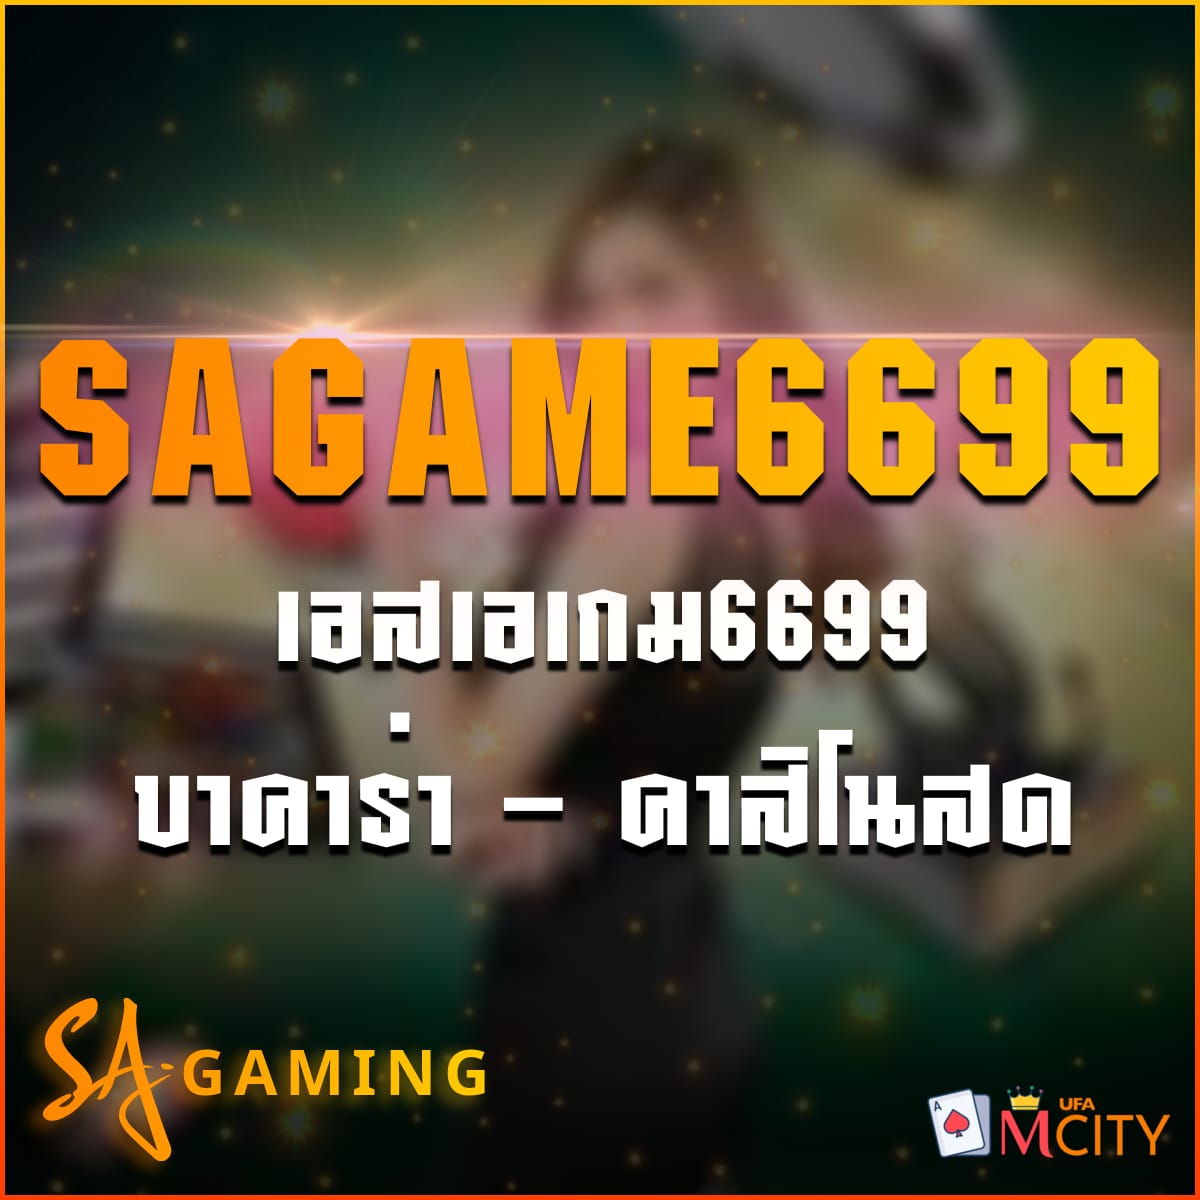 SAGAME6699